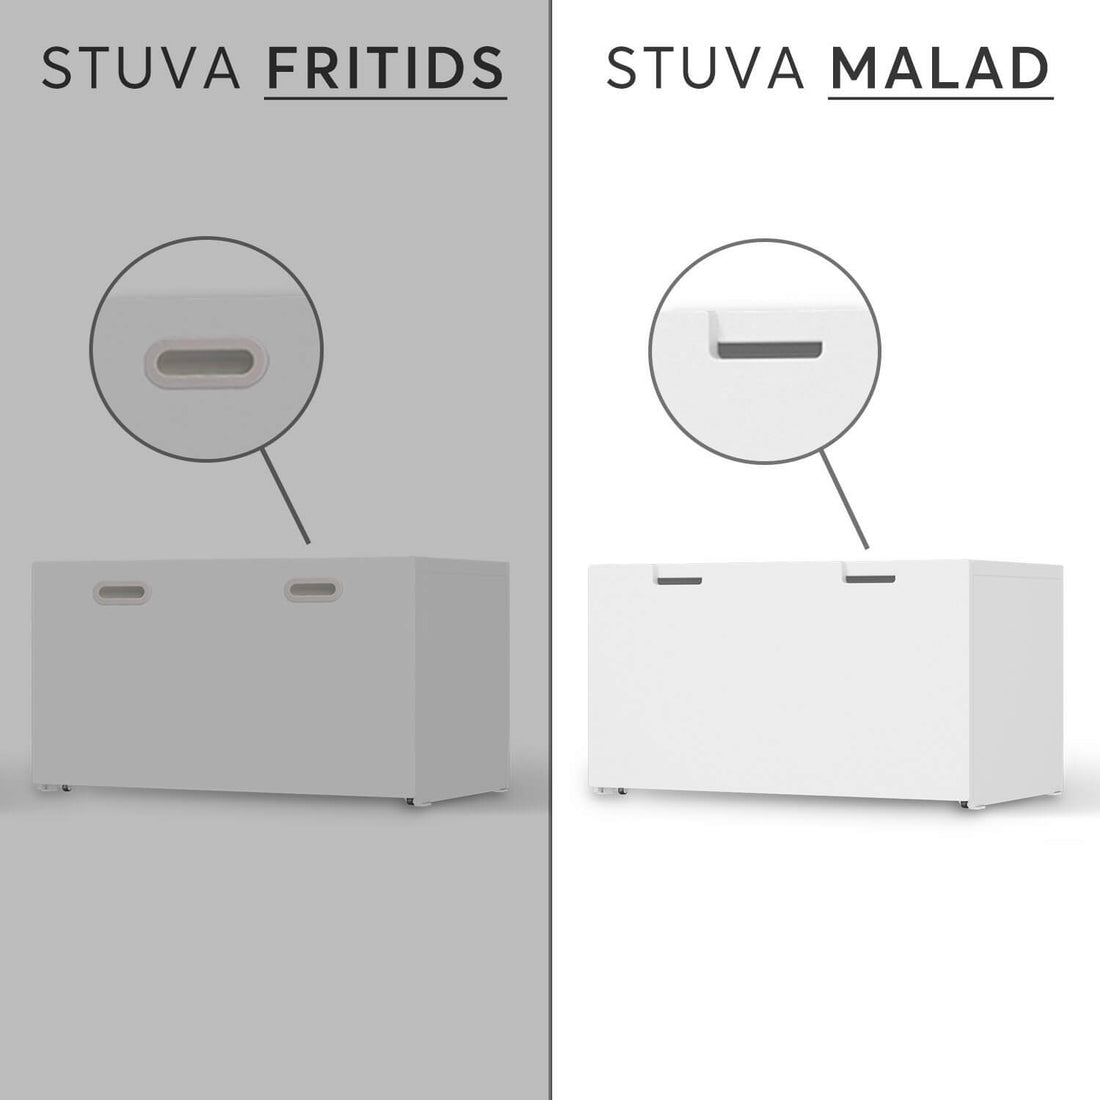 Vergleich IKEA Stuva Malad / Fritids - Politische Weltkarte